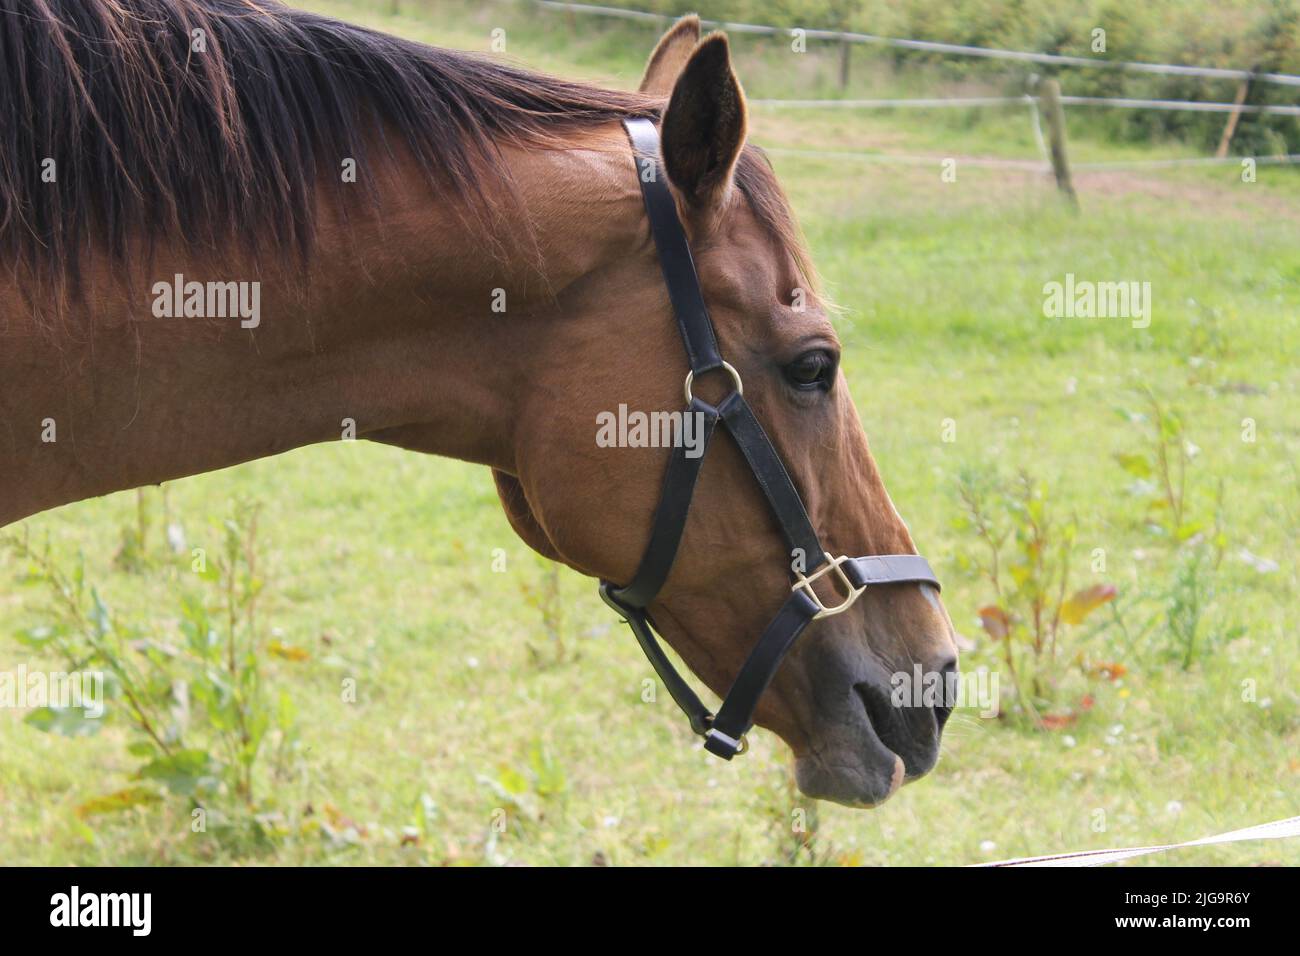 Horses in rural Ireland Stock Photo